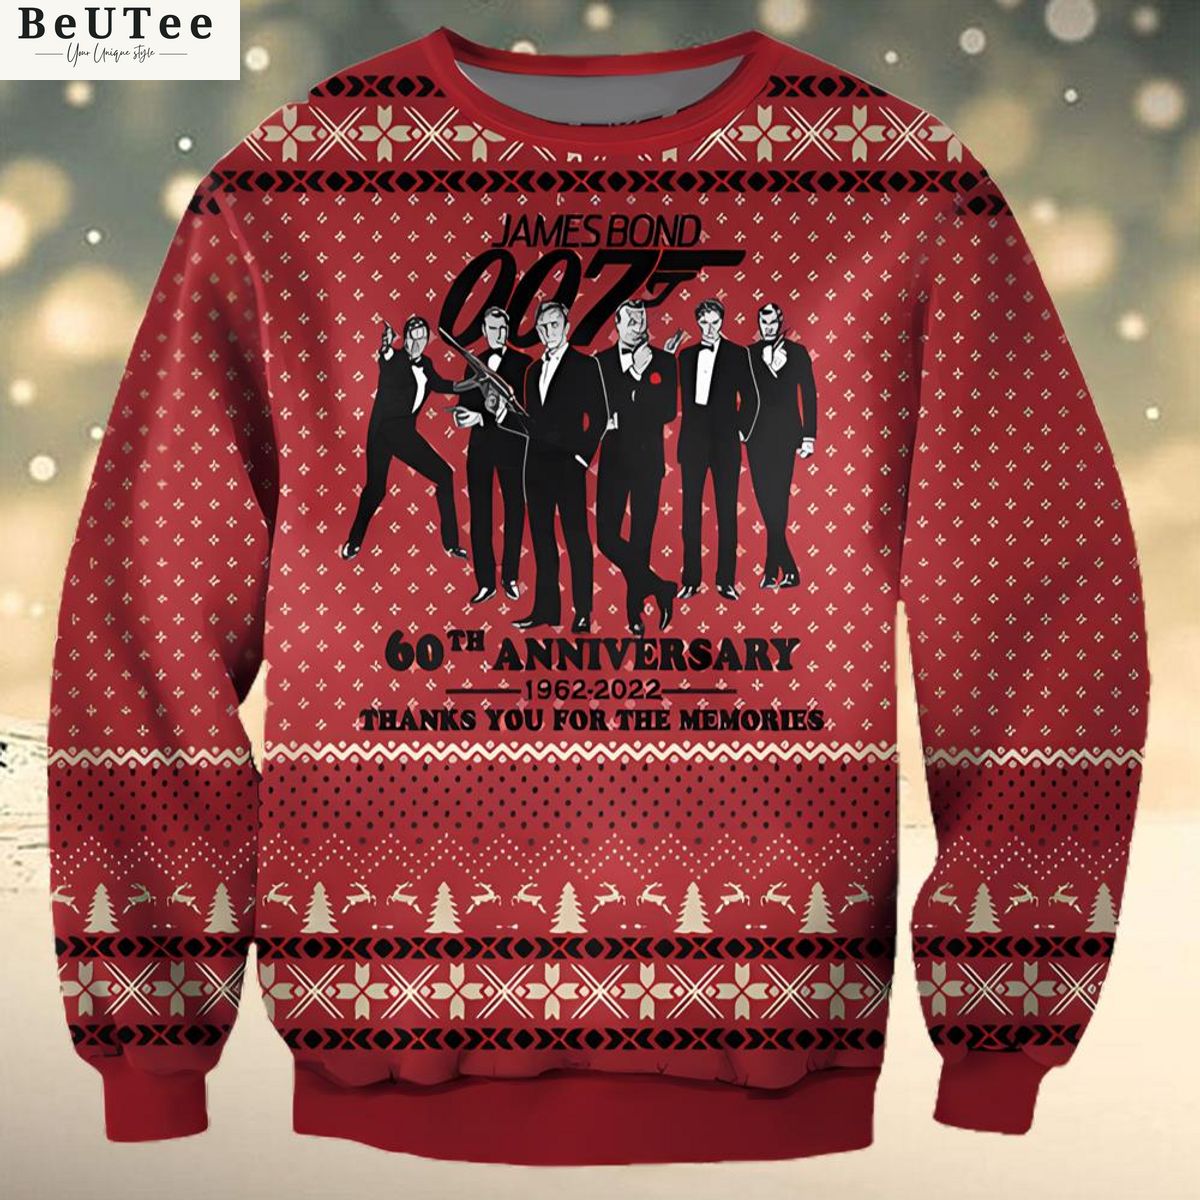 merry christmas james bond 007 ugly sweater jumper 1 J23Gb.jpg